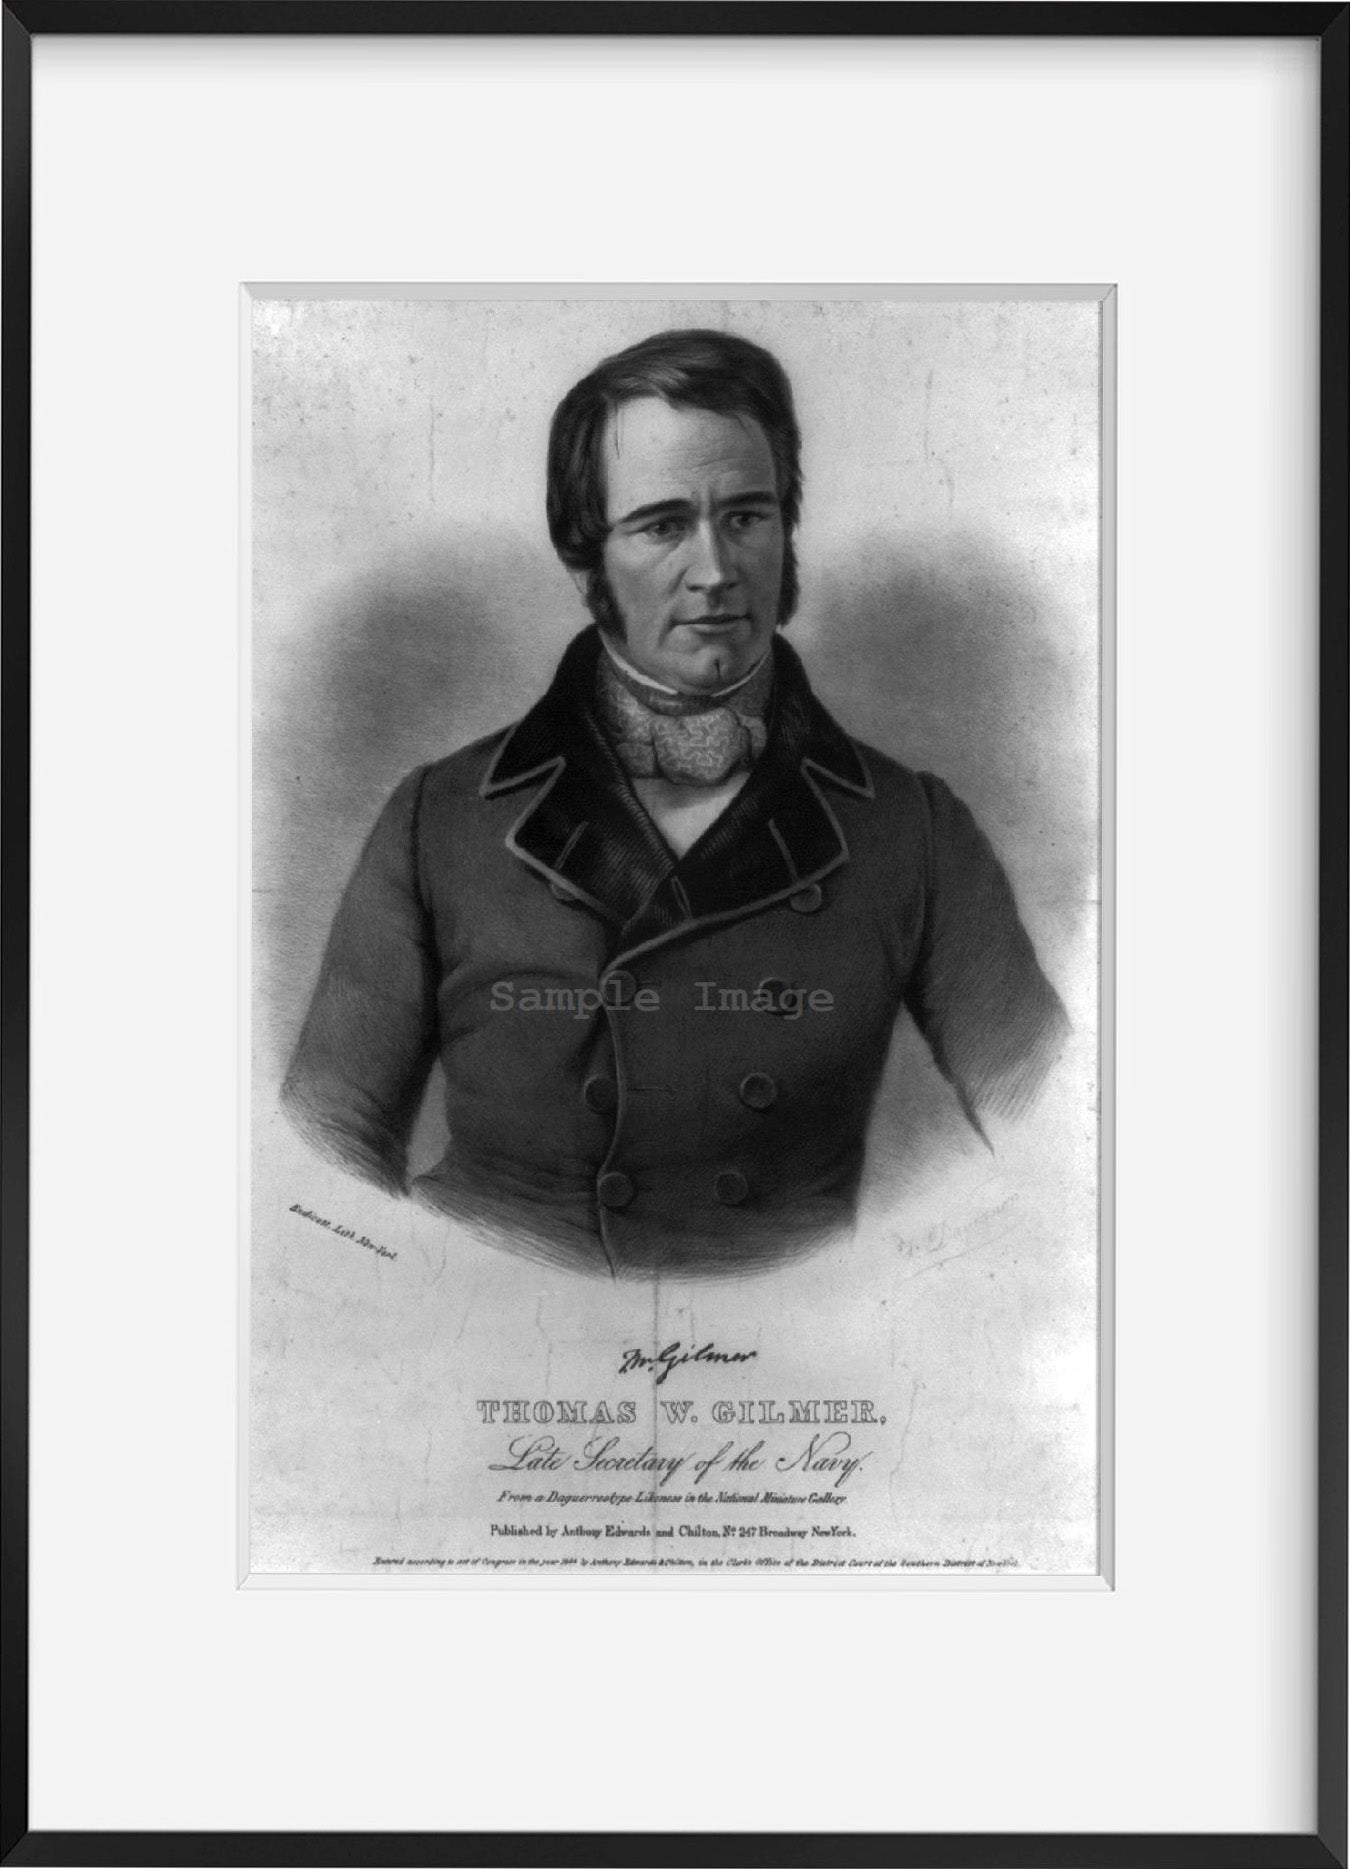 Vintage 1844 print: Thomas W. Gilmer, late secretary of the Navy